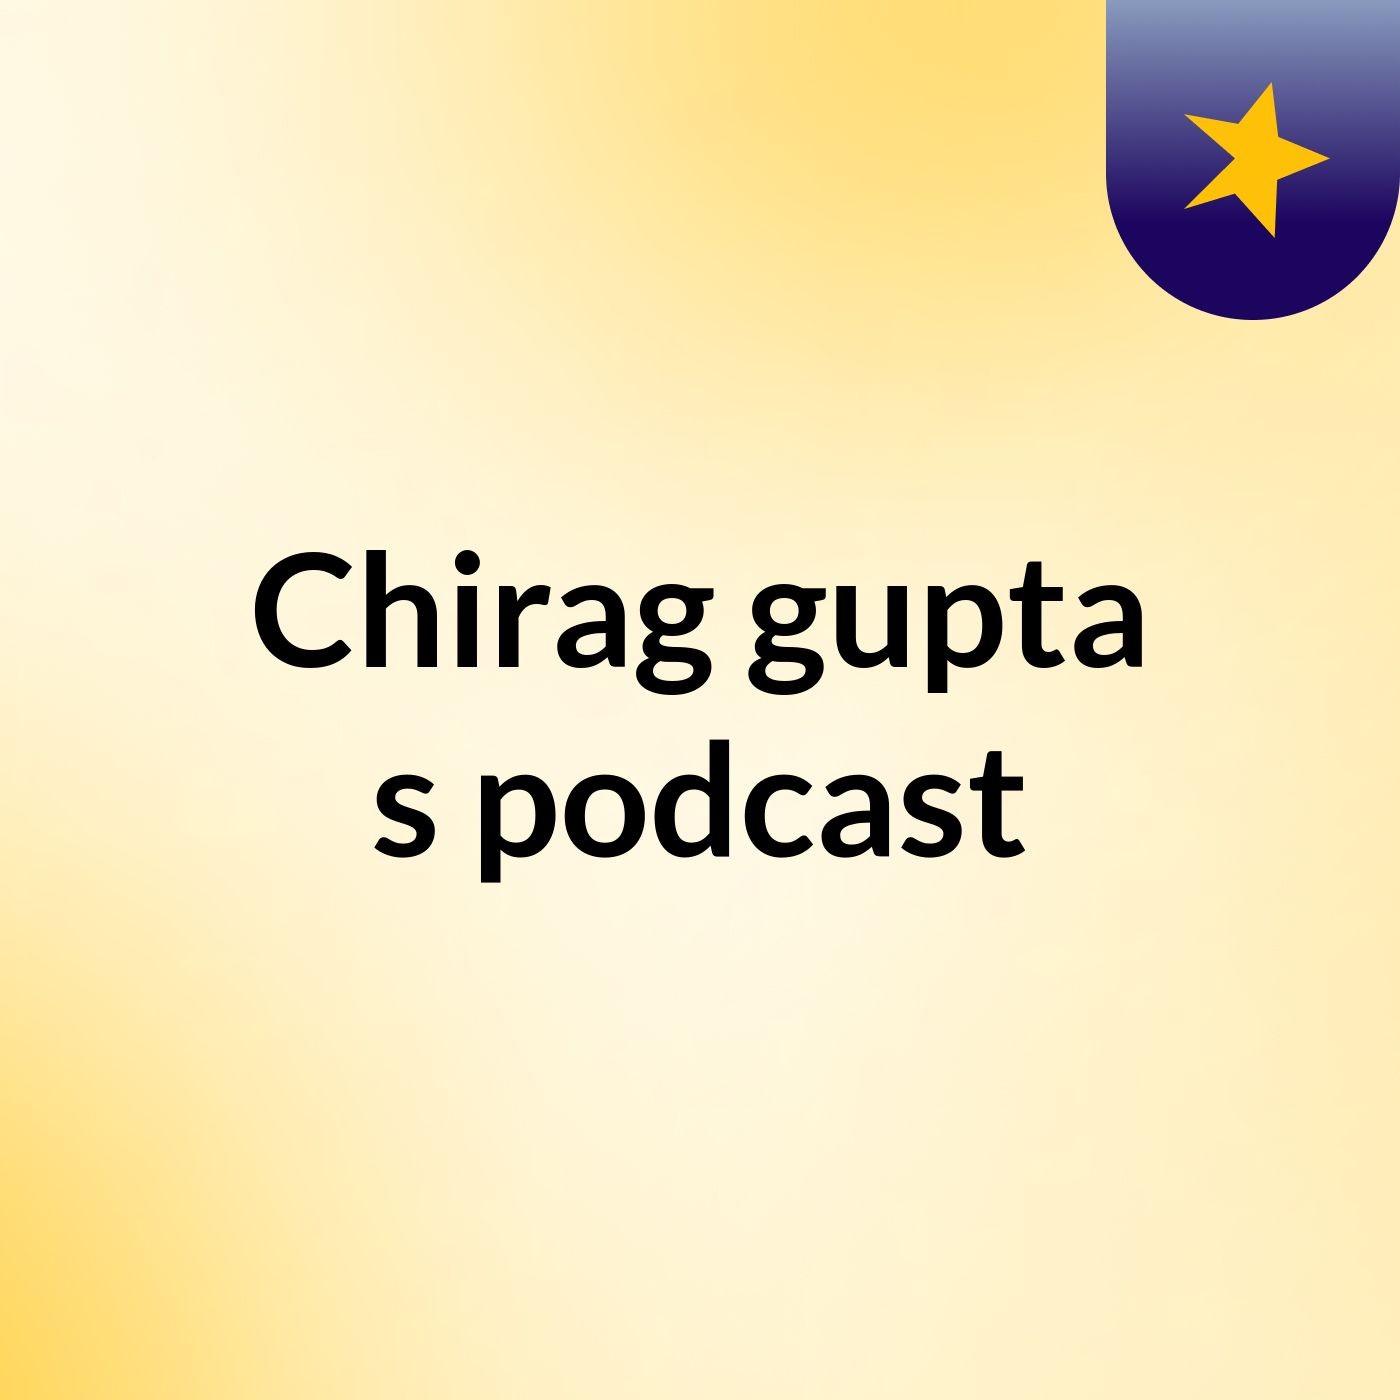 Chirag gupta's podcast